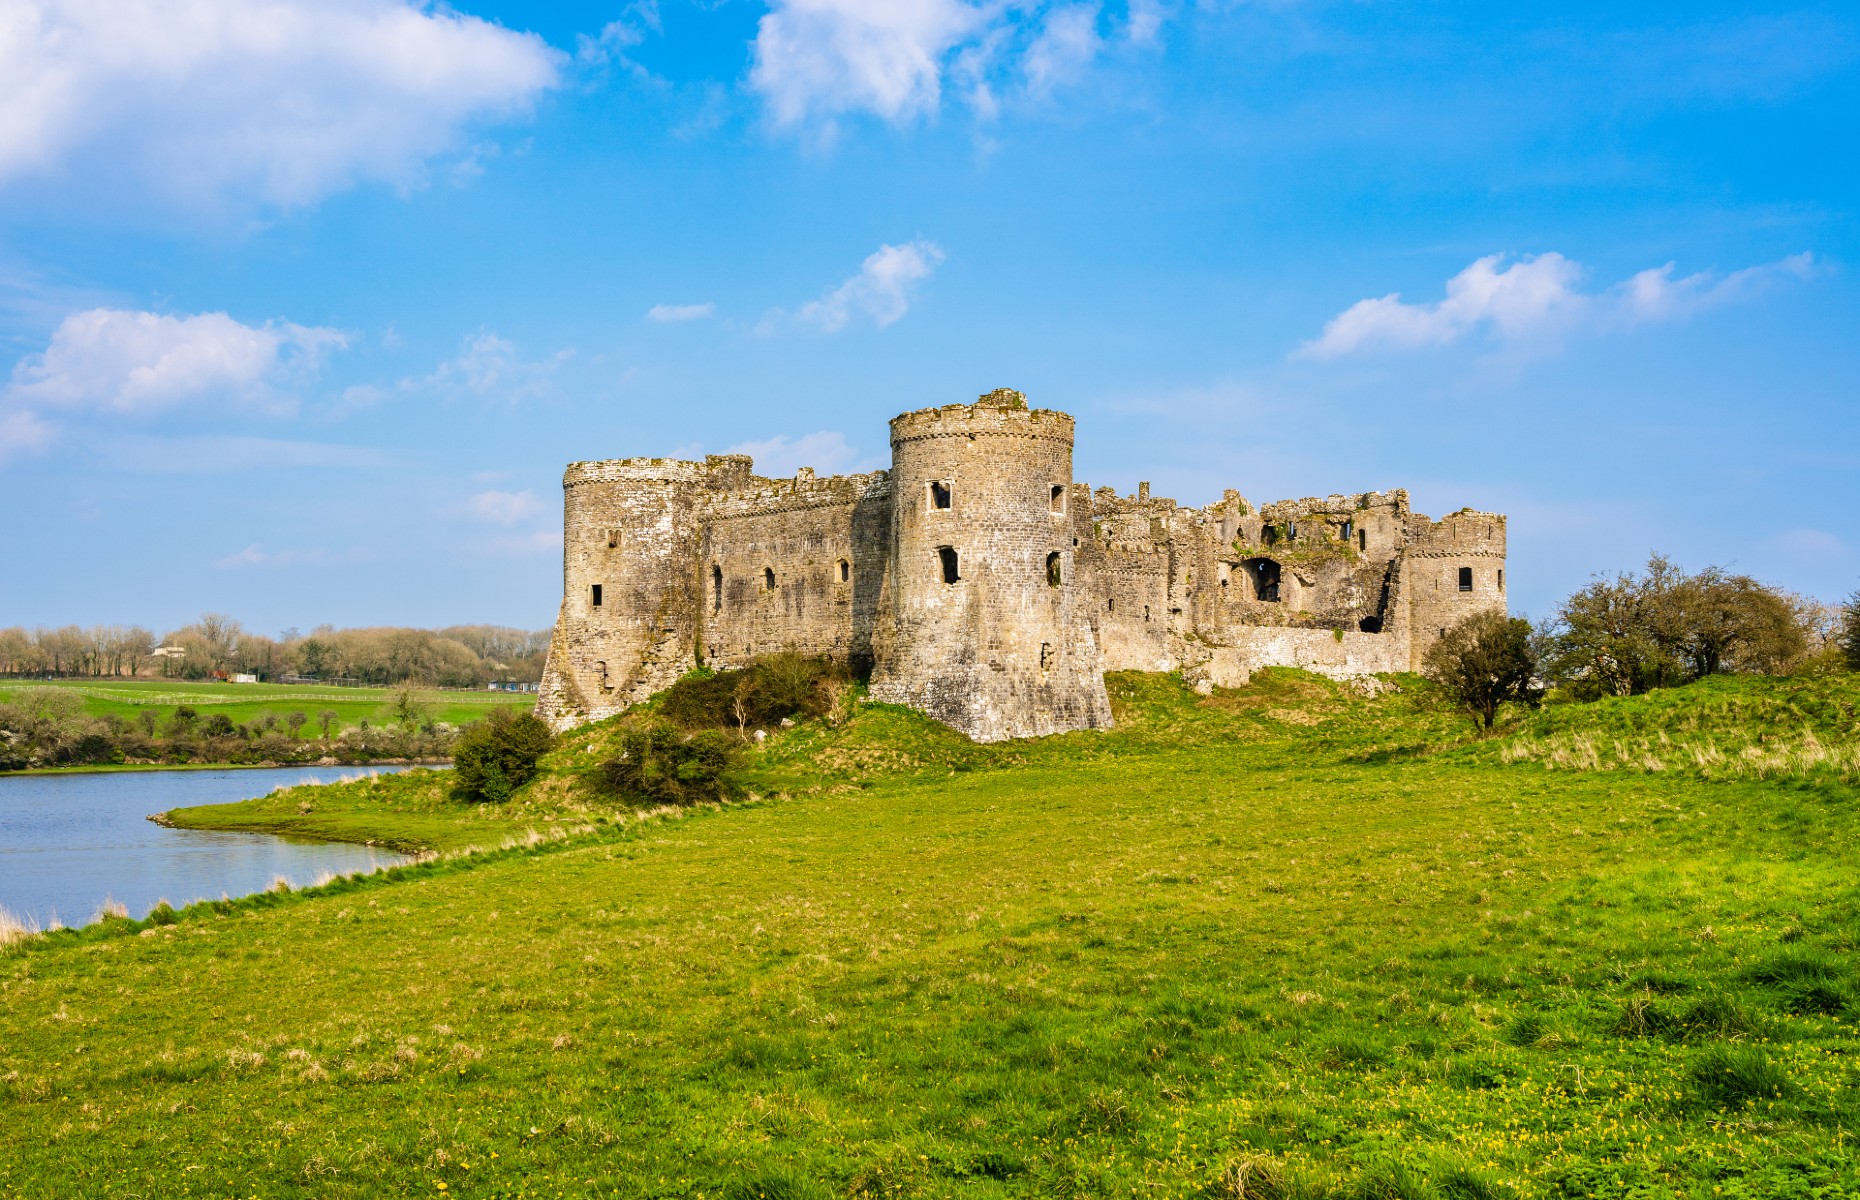 Carew Castle (Image: PhotoFires/Shutterstock)